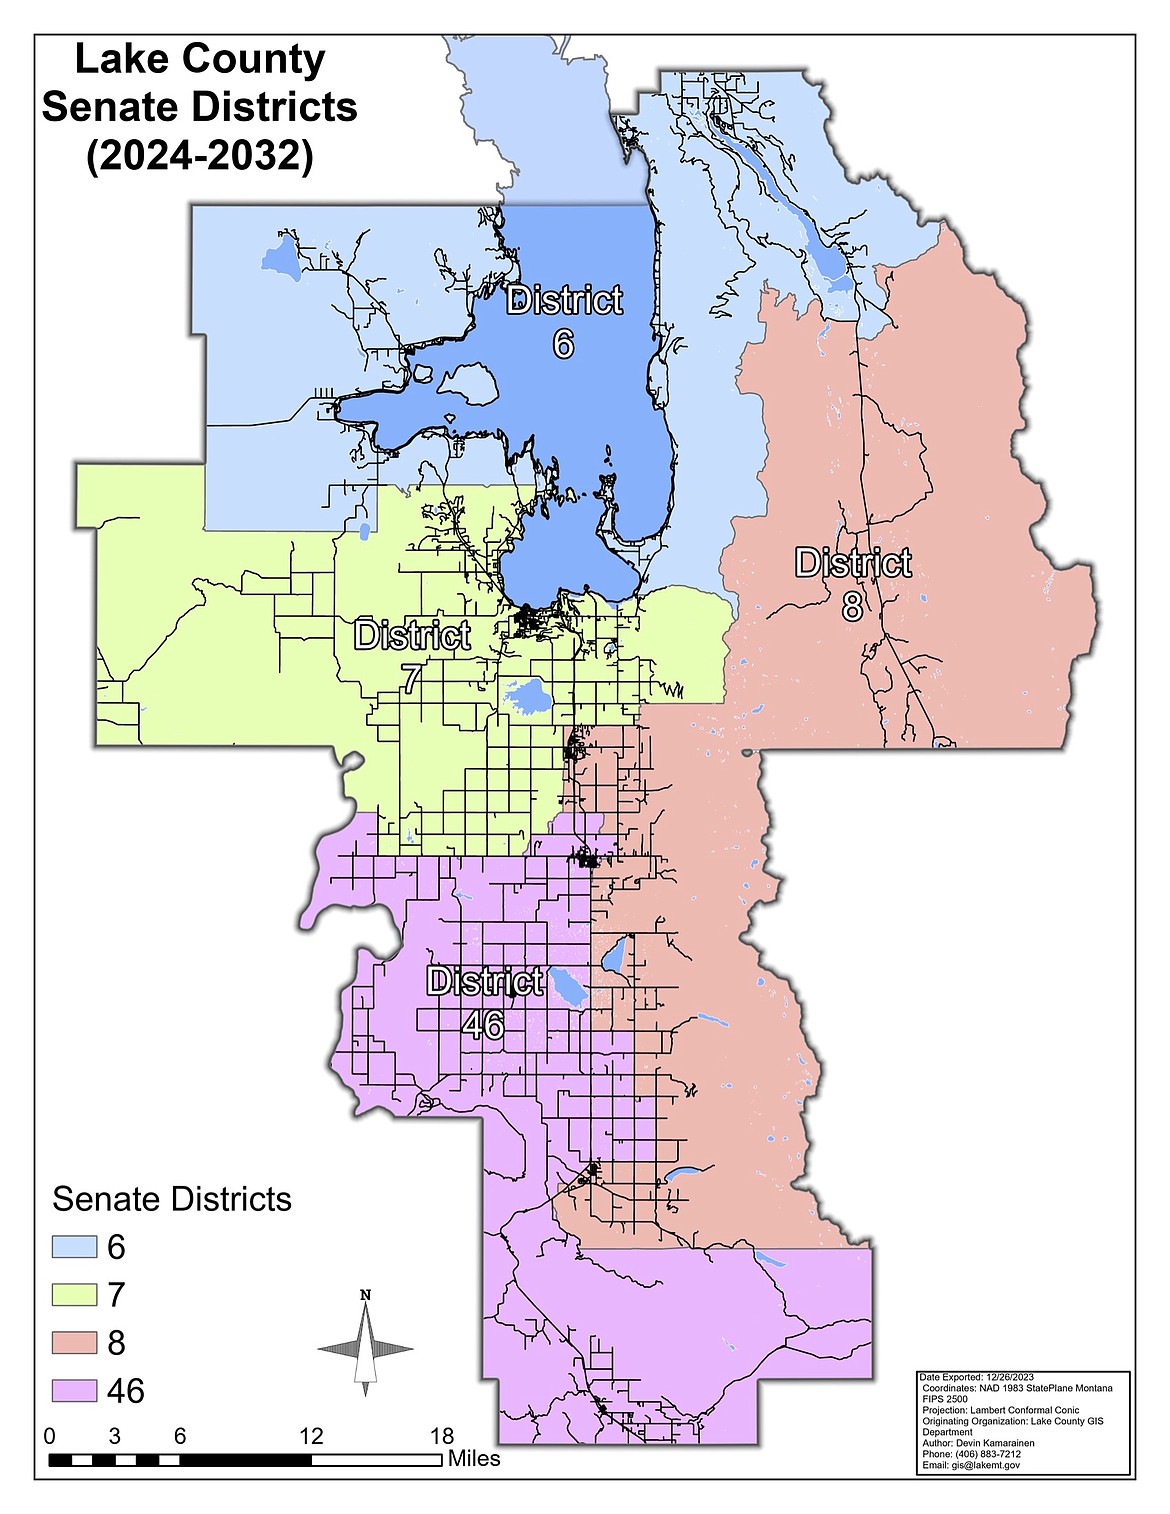 Map shows boundaries of redrawn senate districts in Lake County. (Devin Kamarainen, Lake County GIS Technician)